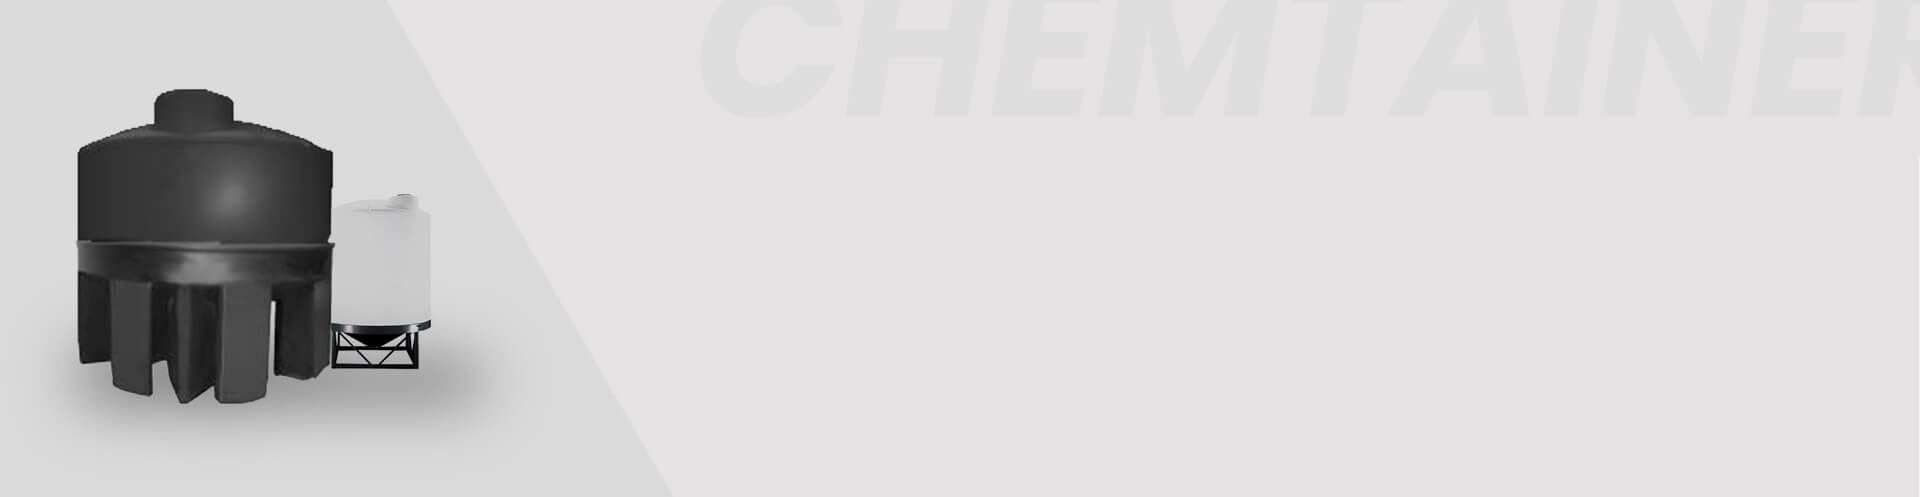 Chem-Tainer Industries, Inc.